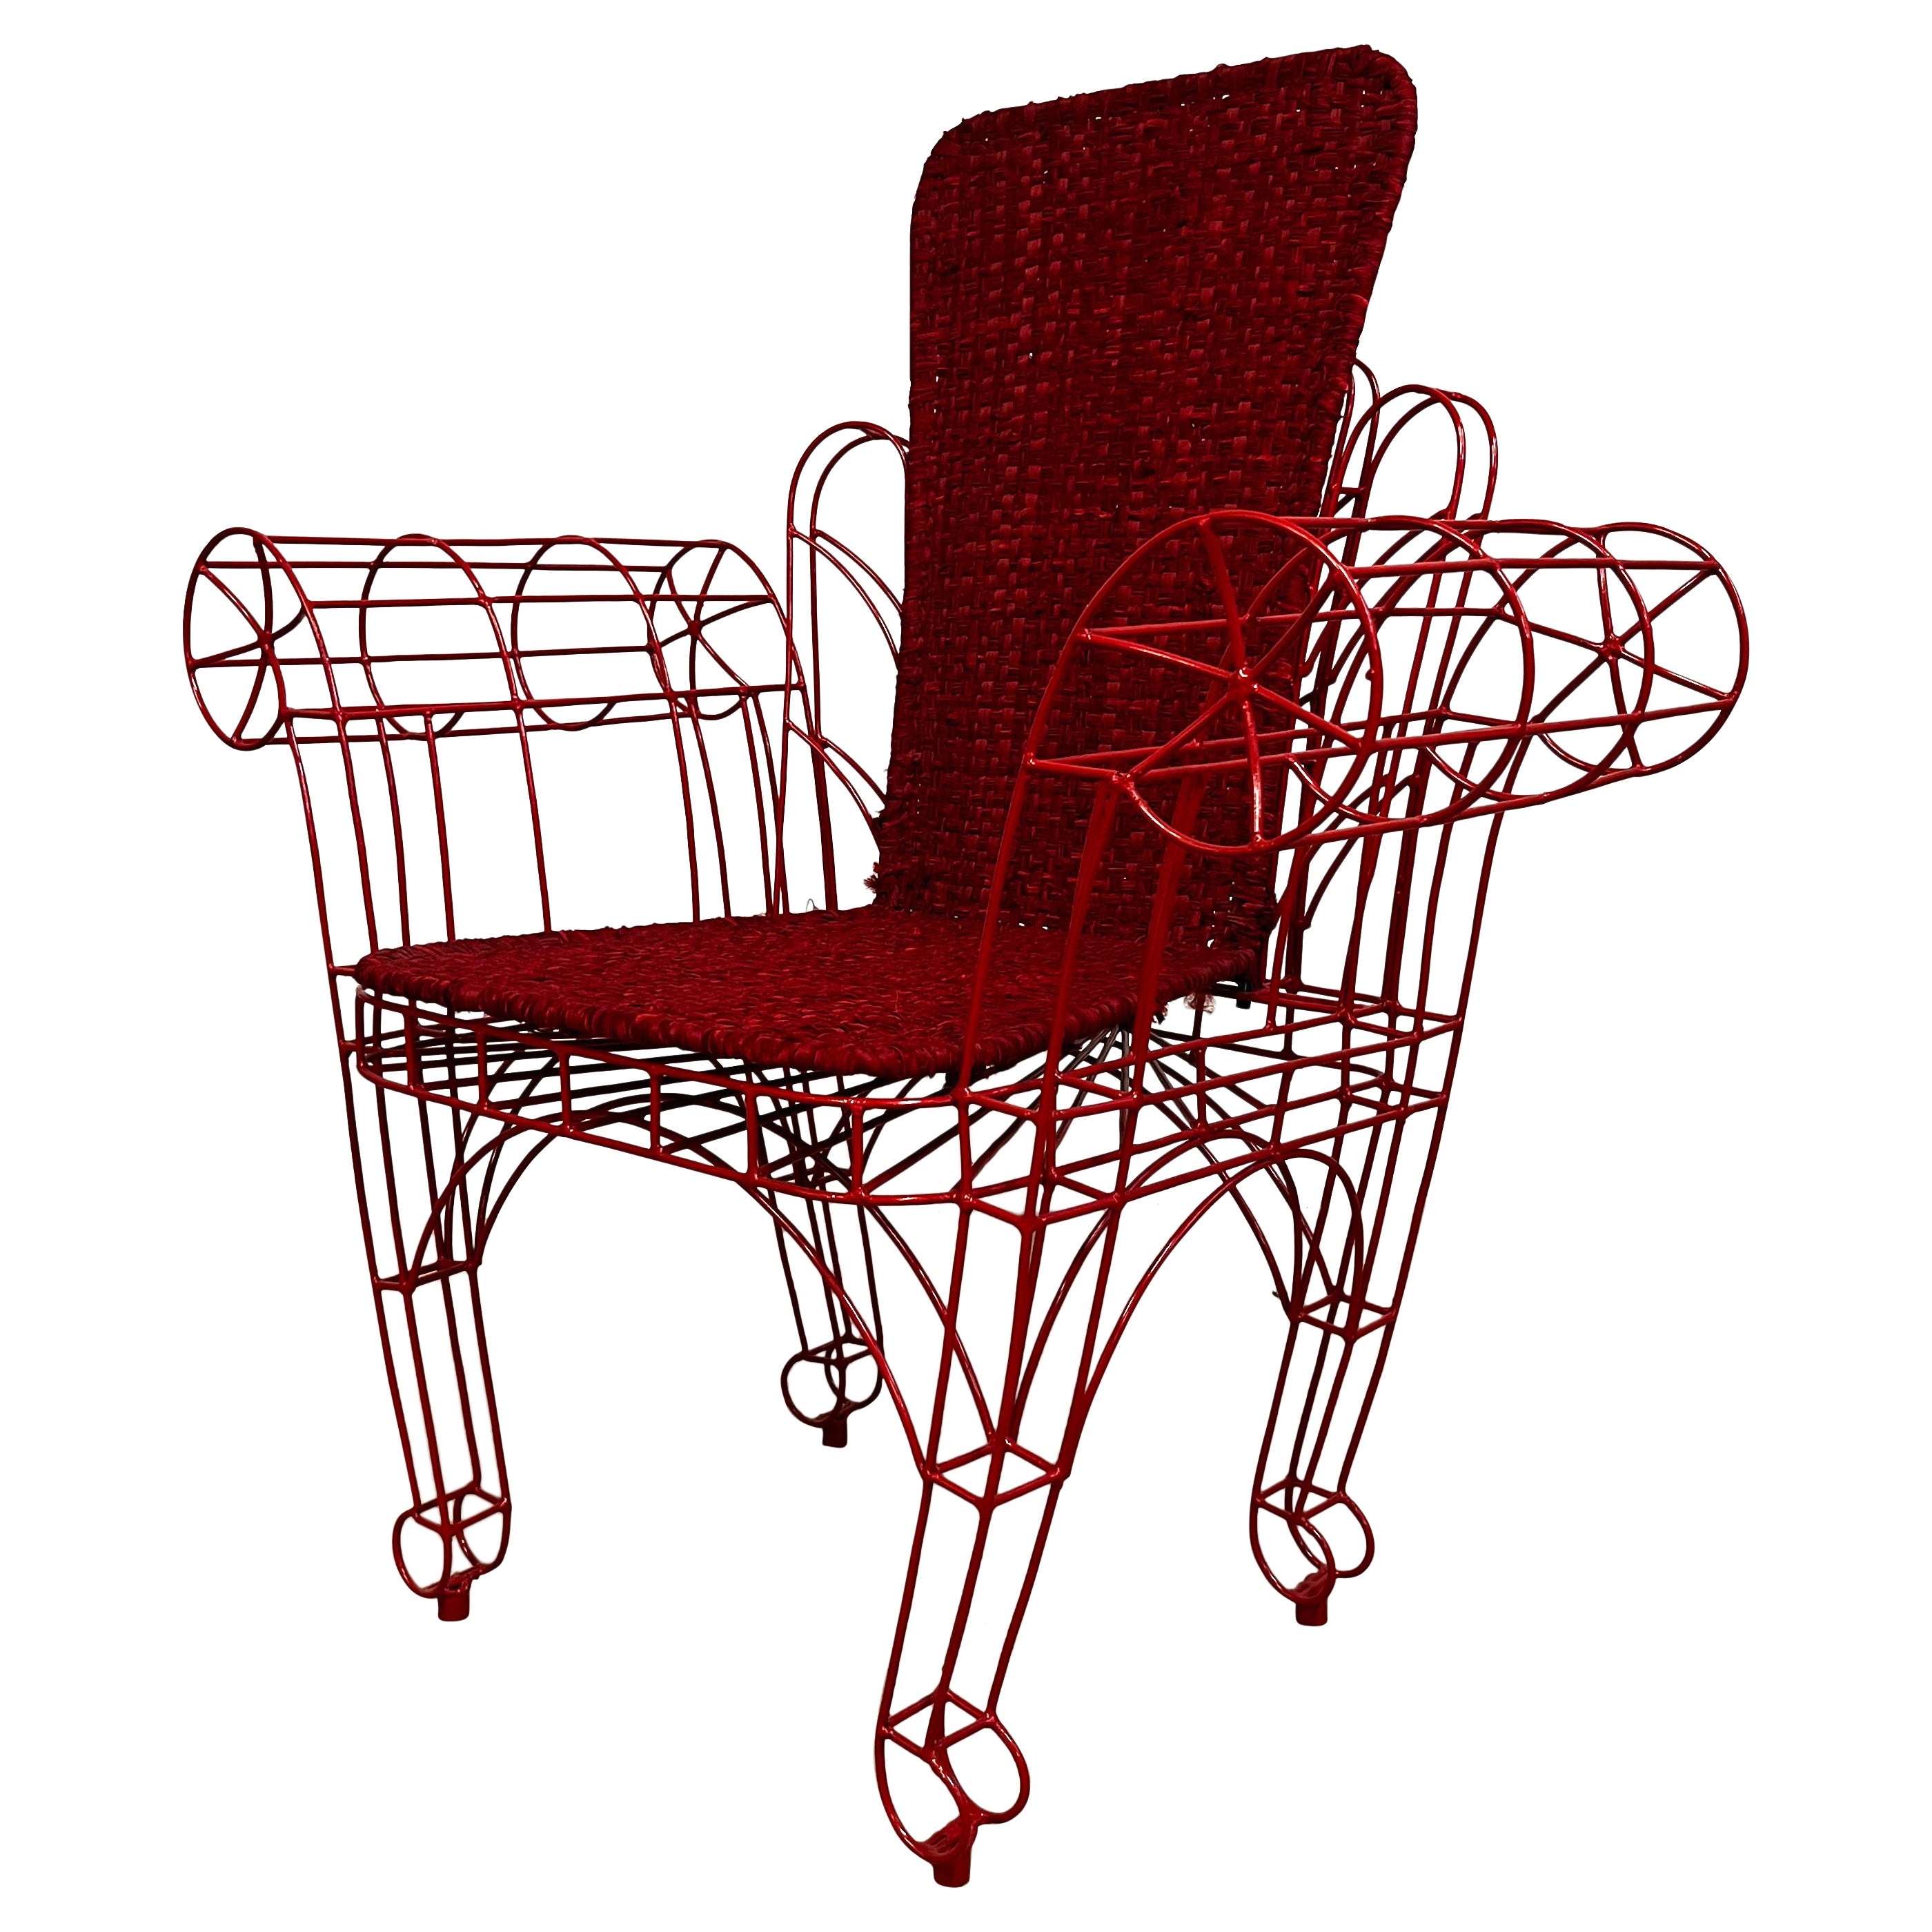 Spazzapan Italienischer postmoderner Pop-Art-Sessel aus rotem Metall mit Stoffbezug, Spazzapan